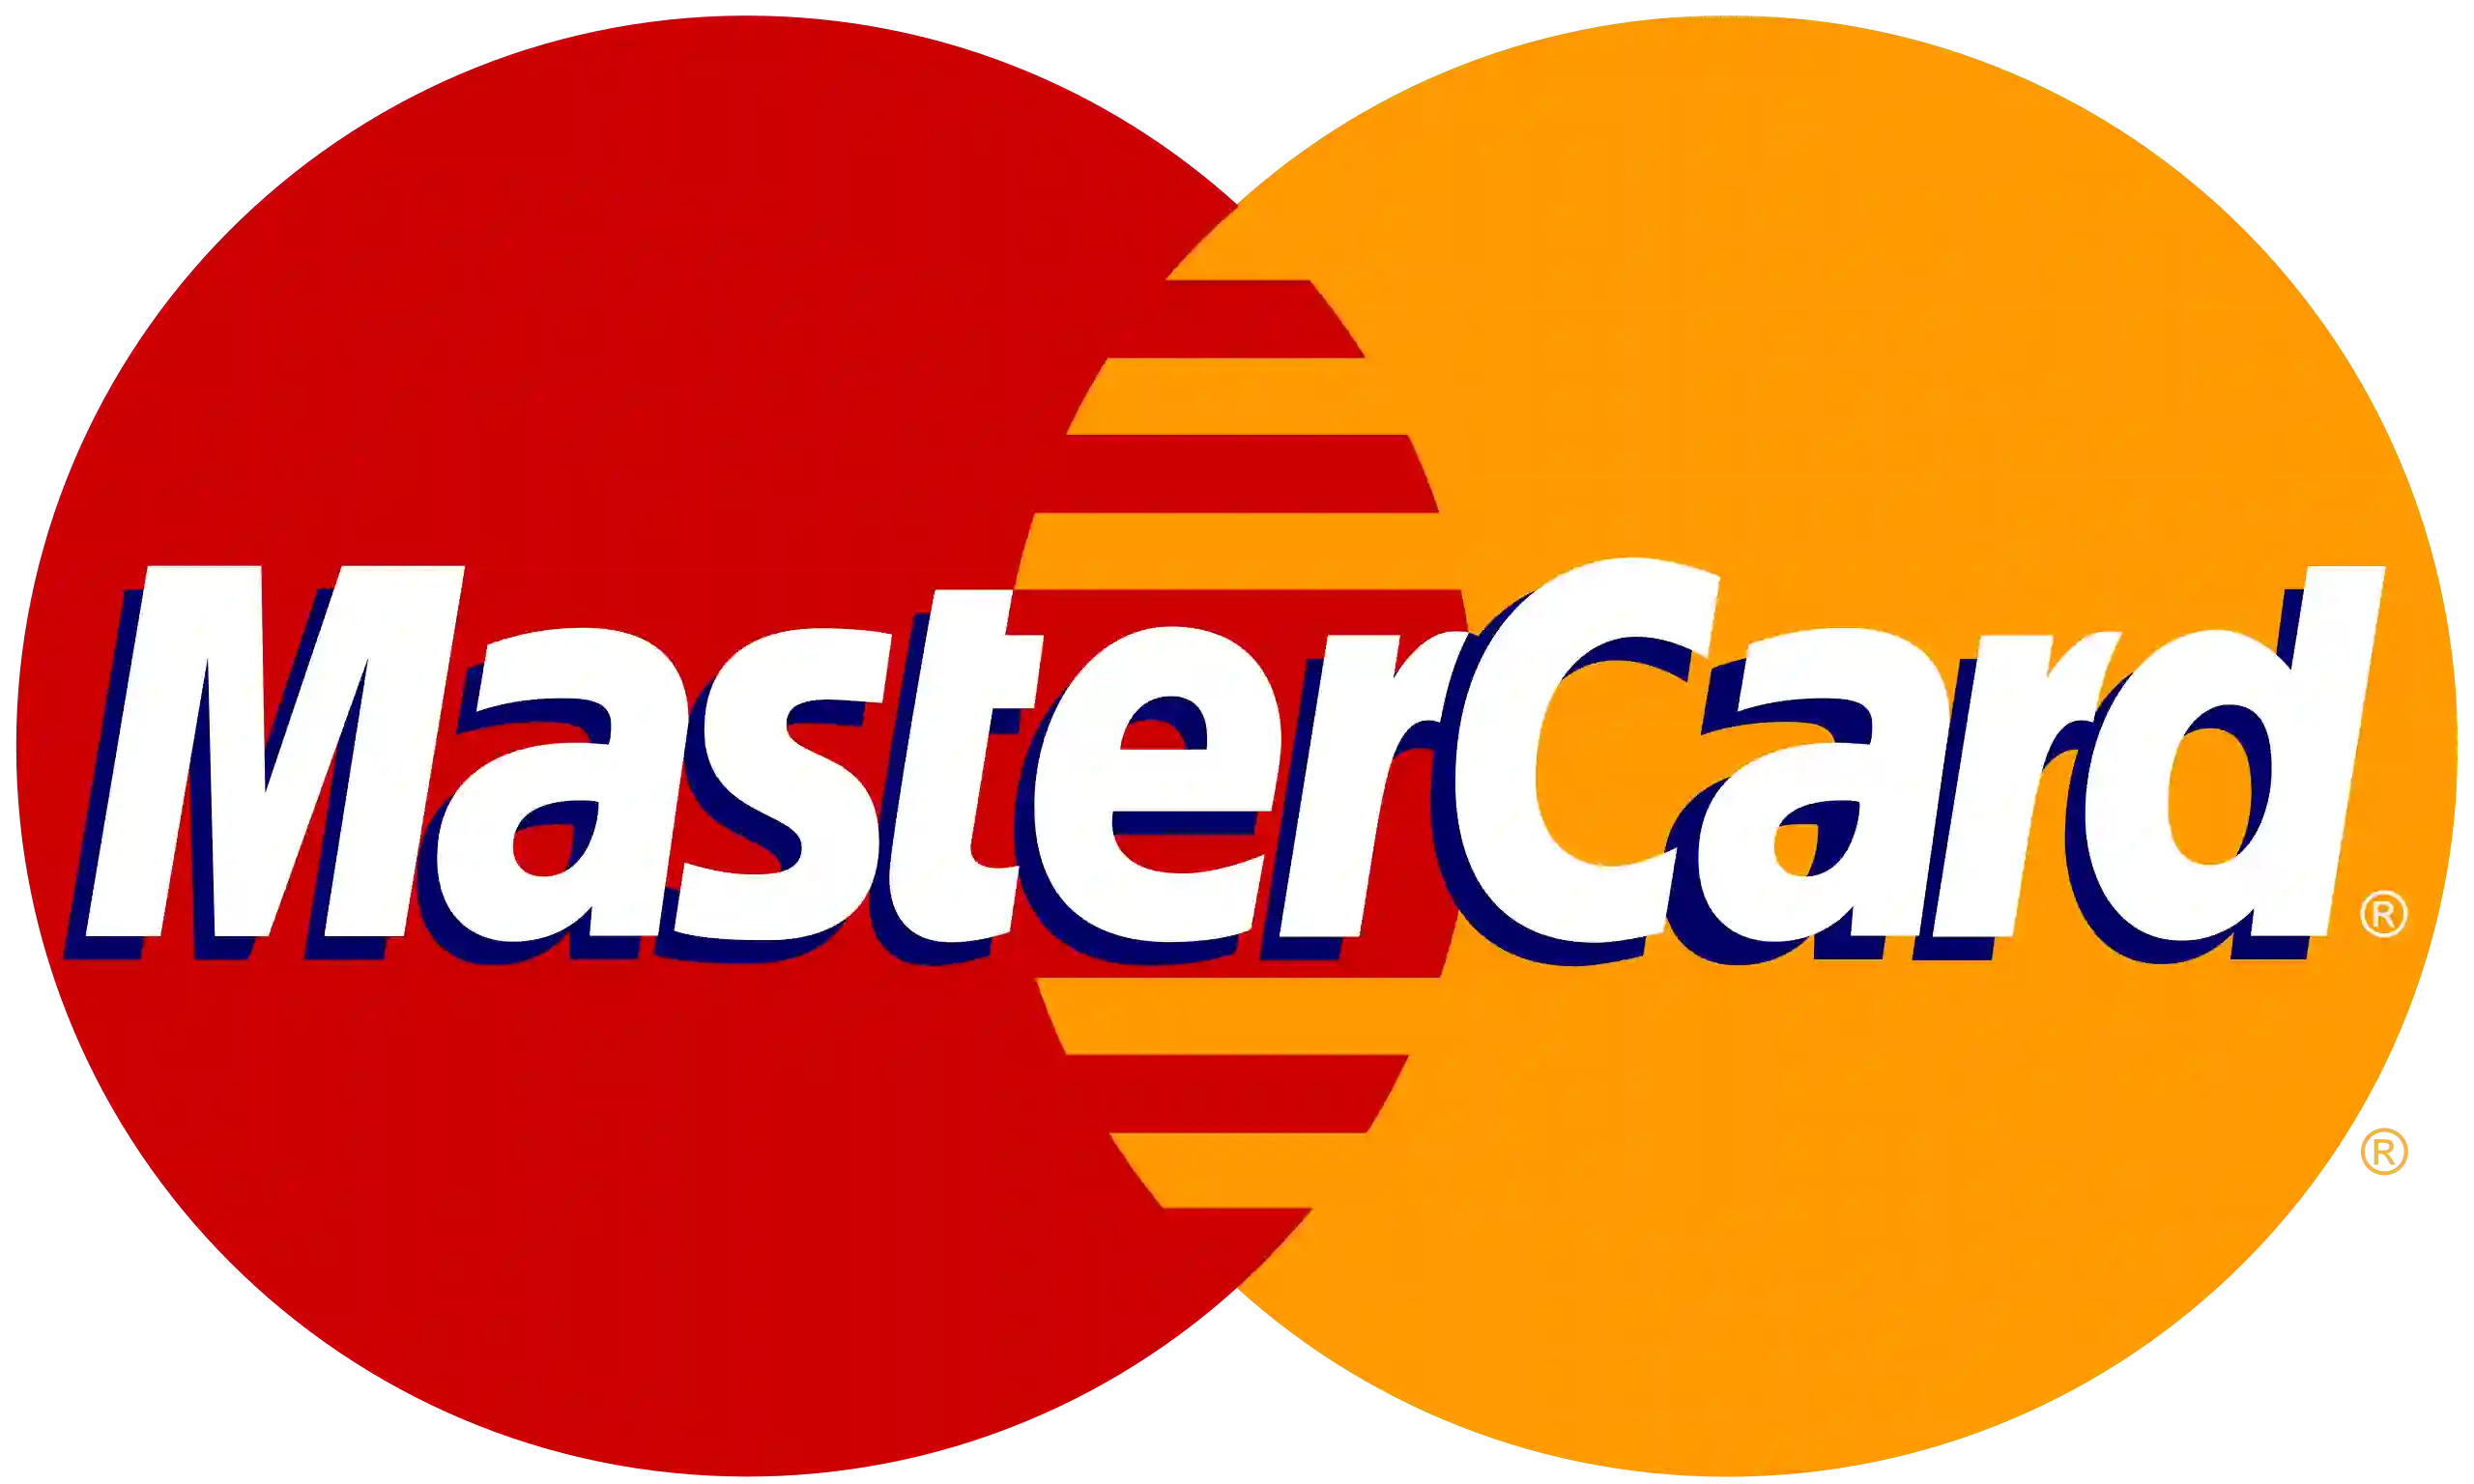 مسترکارن-master card